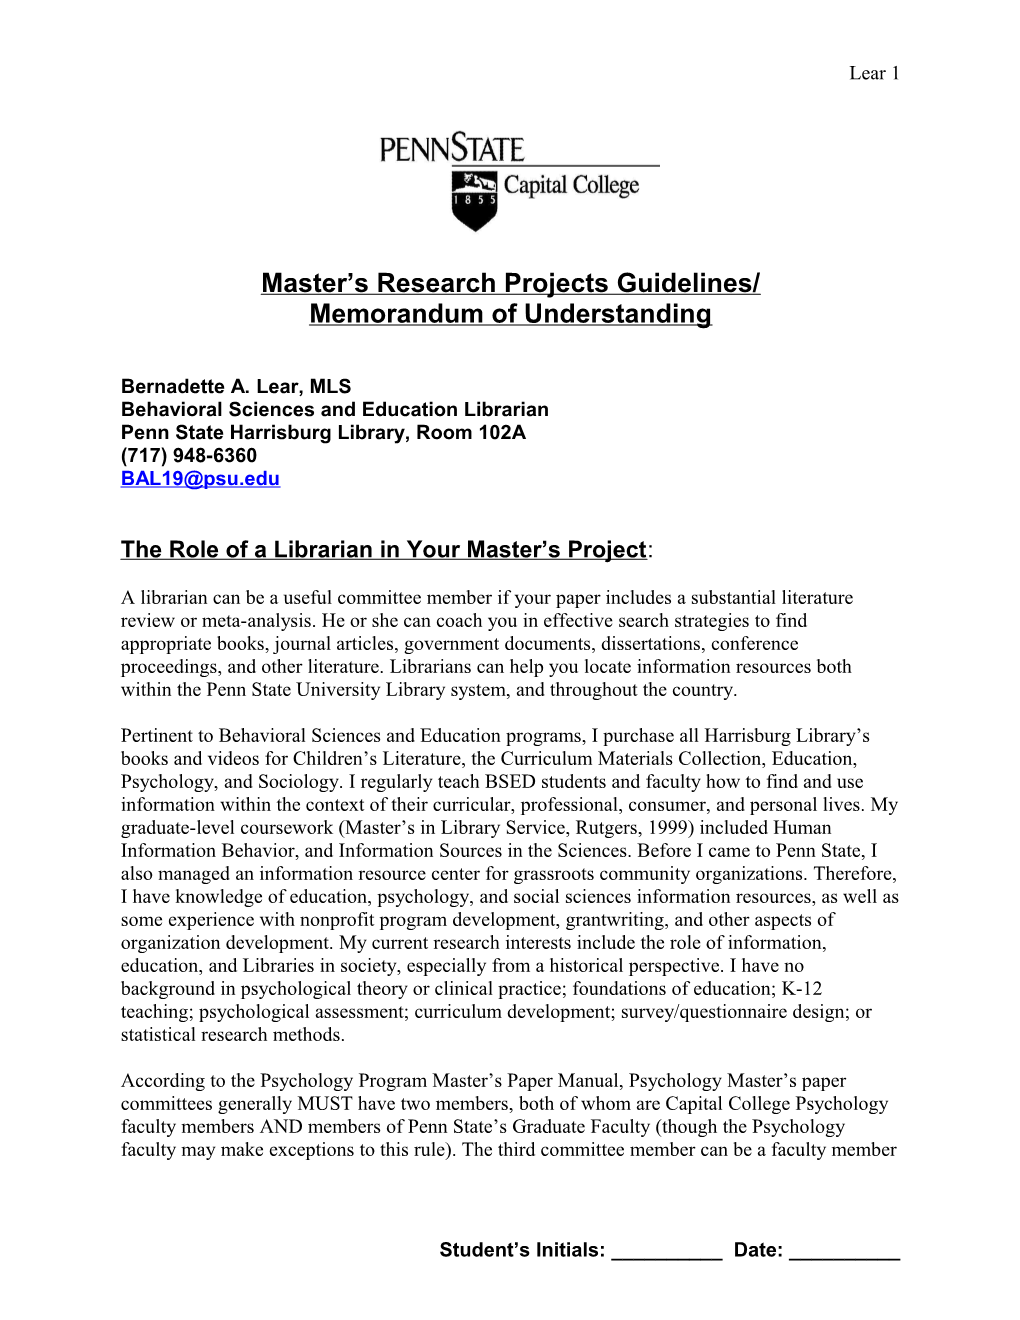 Research Projects Guidelines/Memorandum of Understanding